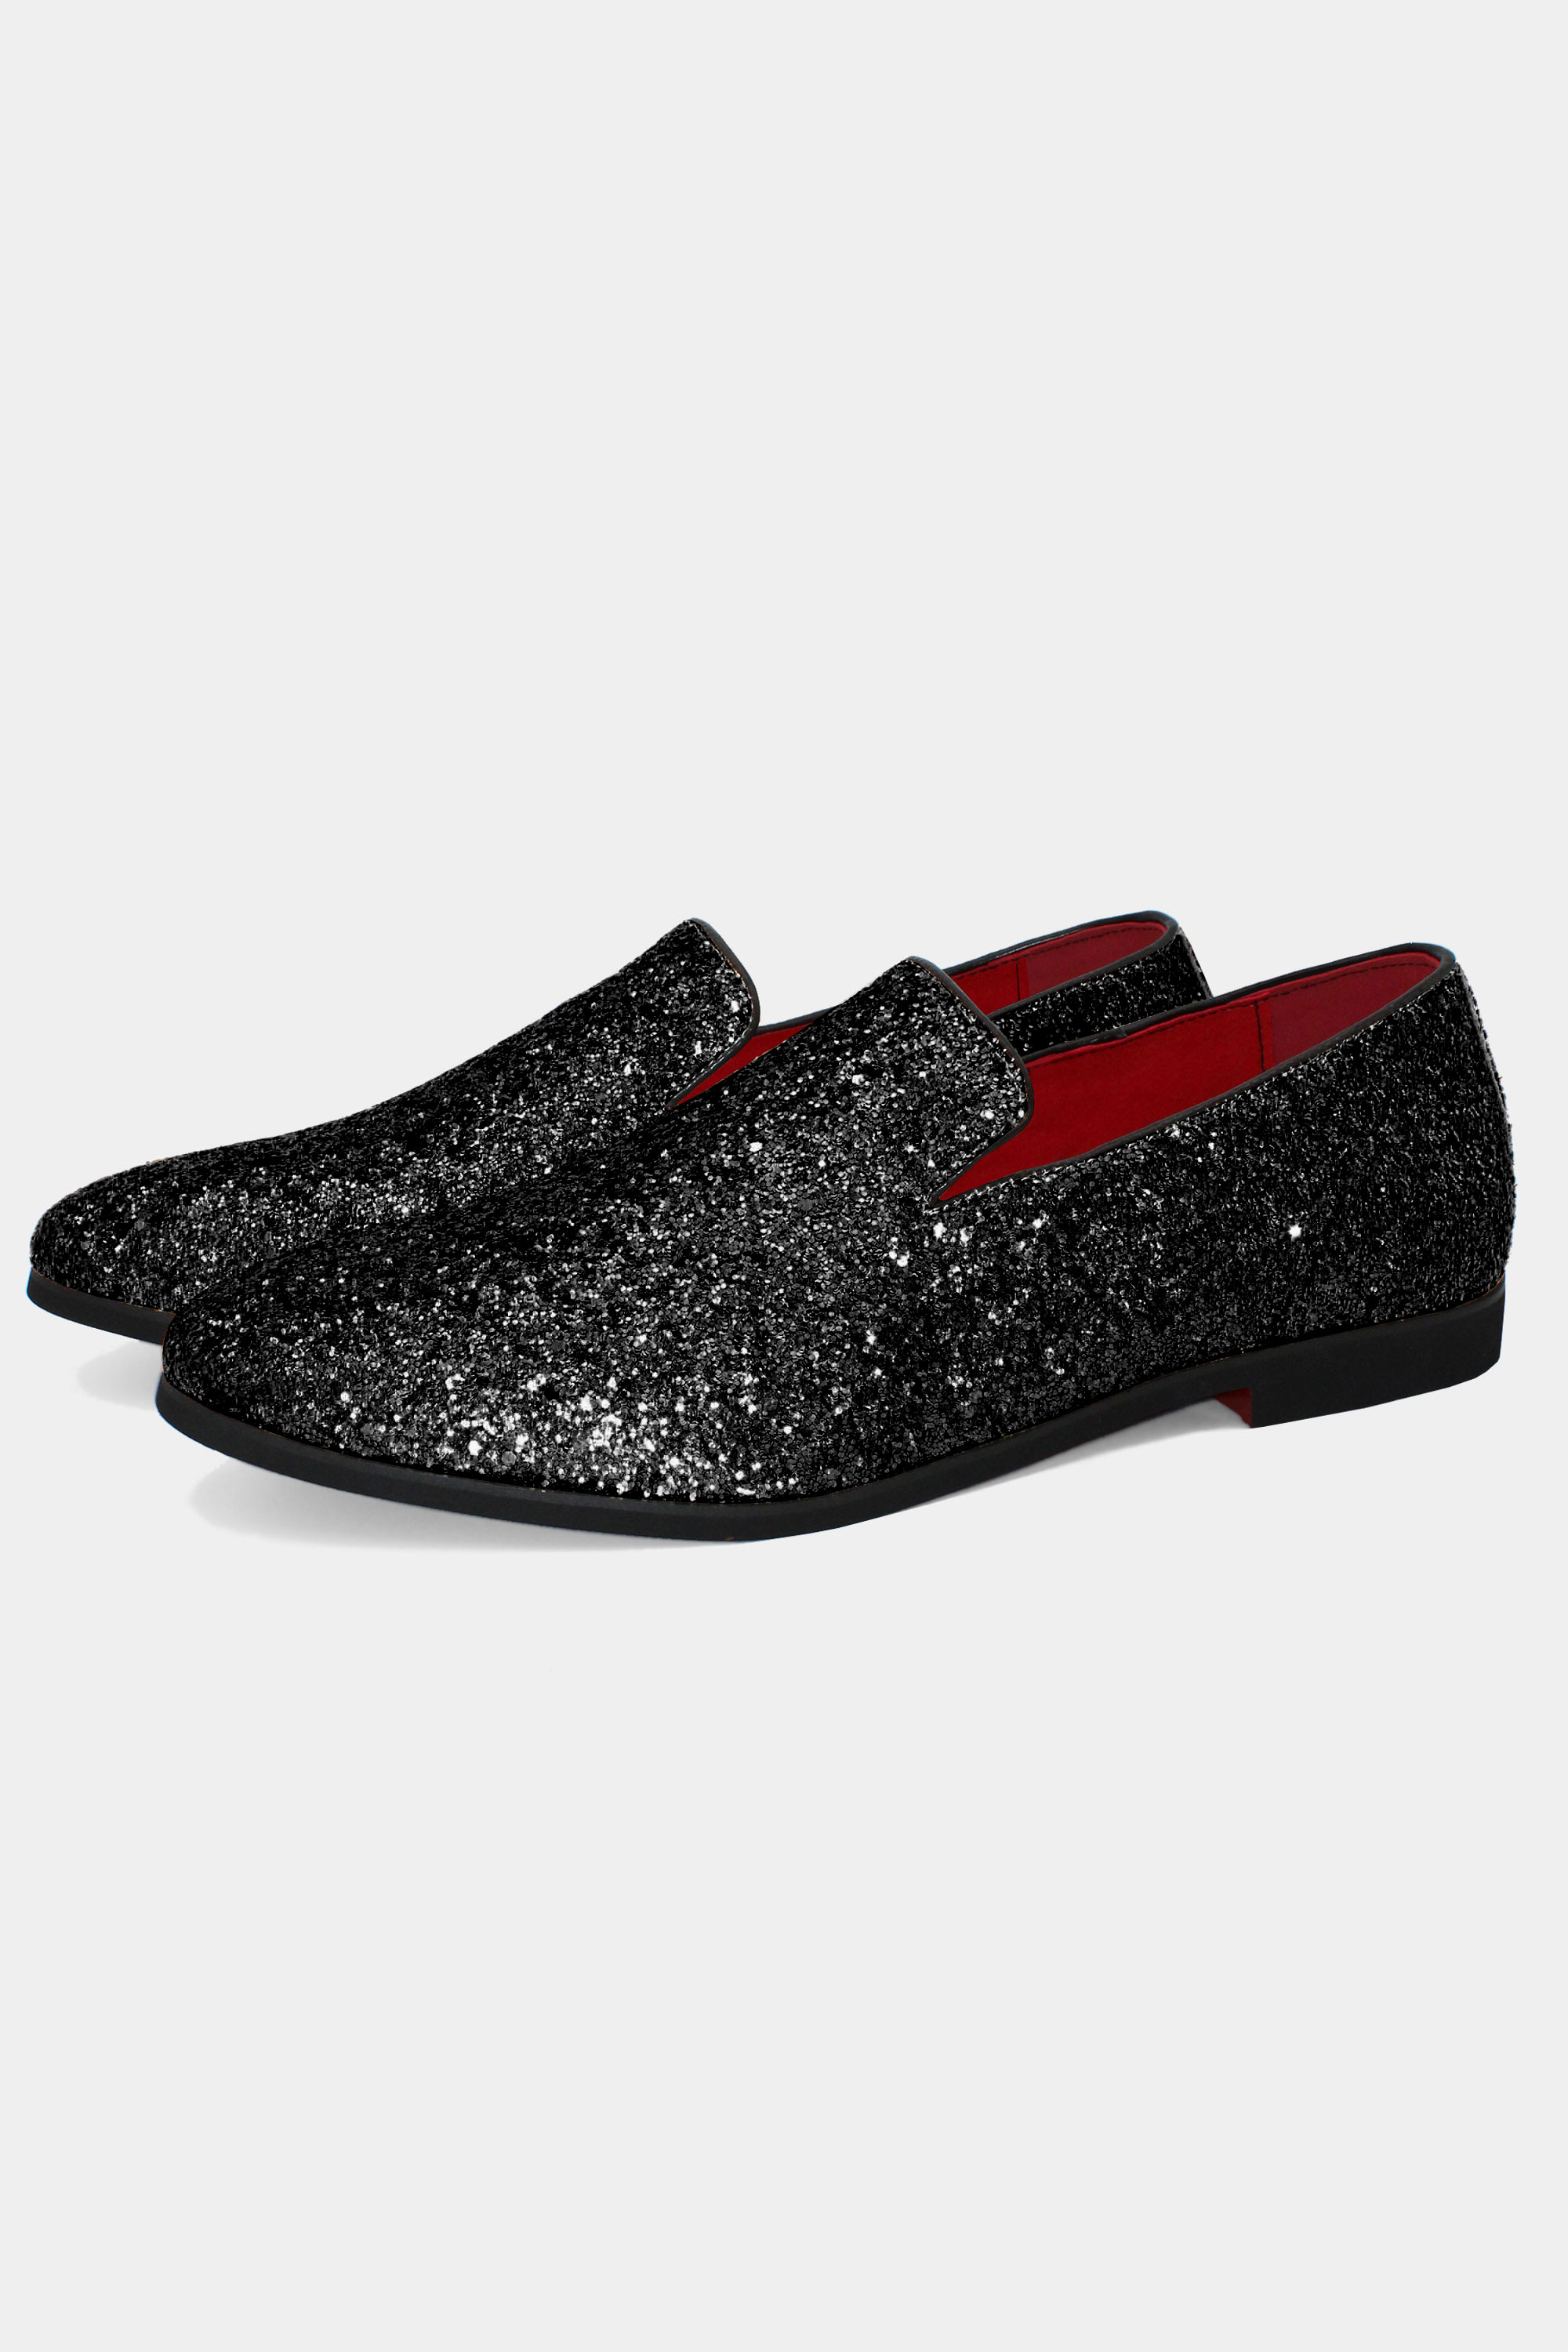 Men's Black Glitter Shoes Loafers | Guru